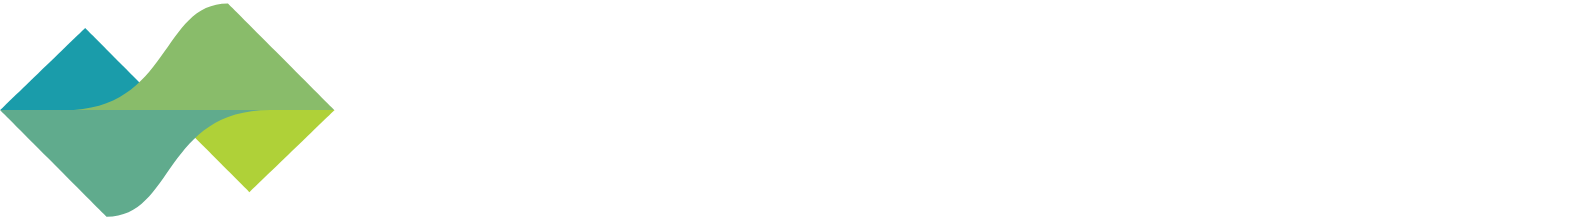 Palomar Holdings logo large for dark backgrounds (transparent PNG)